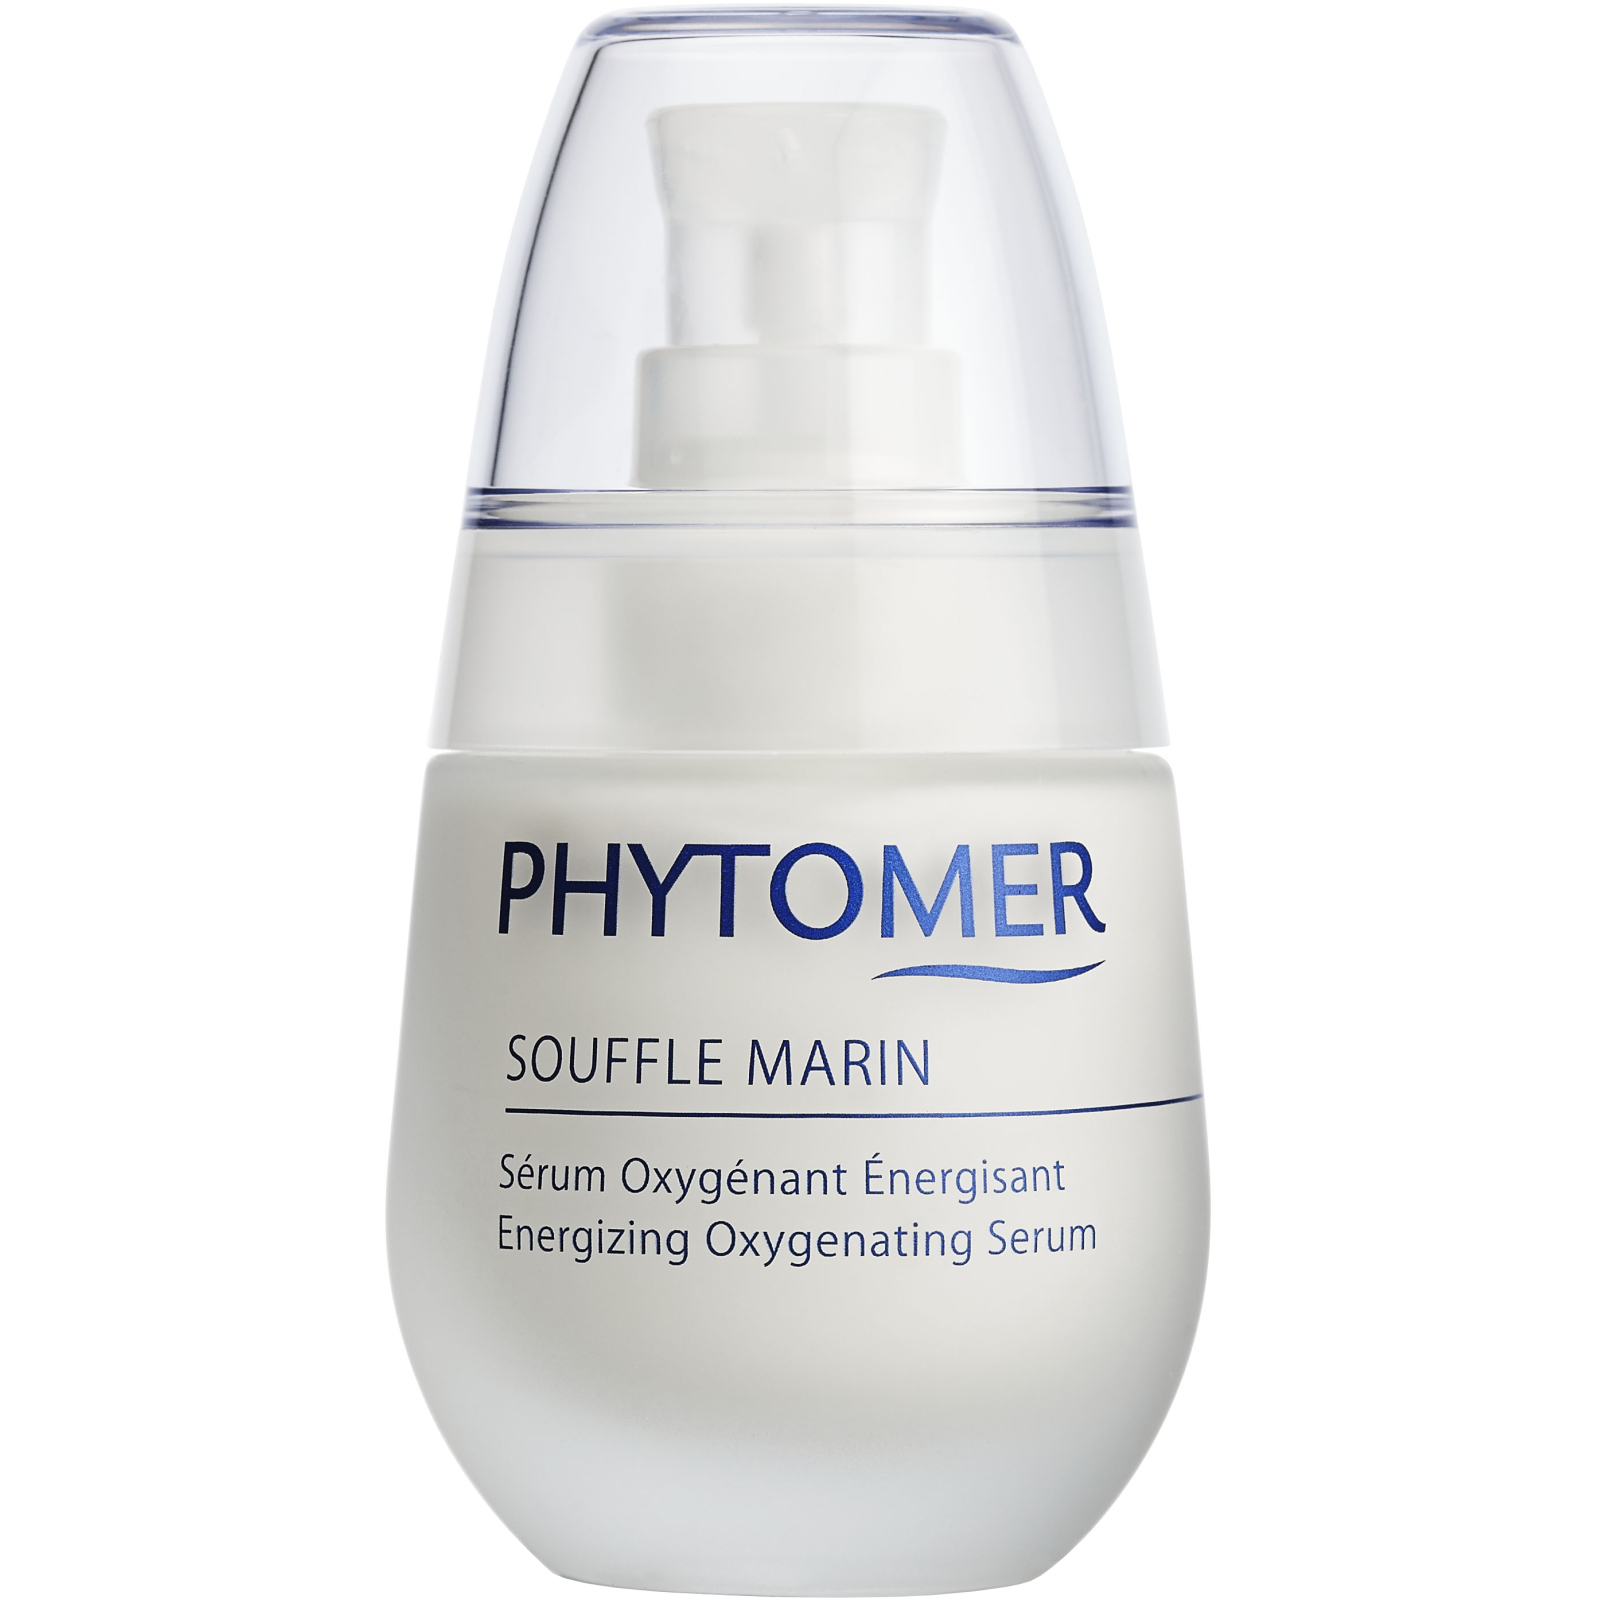 Сыворотка для лица Phytomer Souffle Marin Energizing Oxygenating Serum 30 мл (3530013501746)